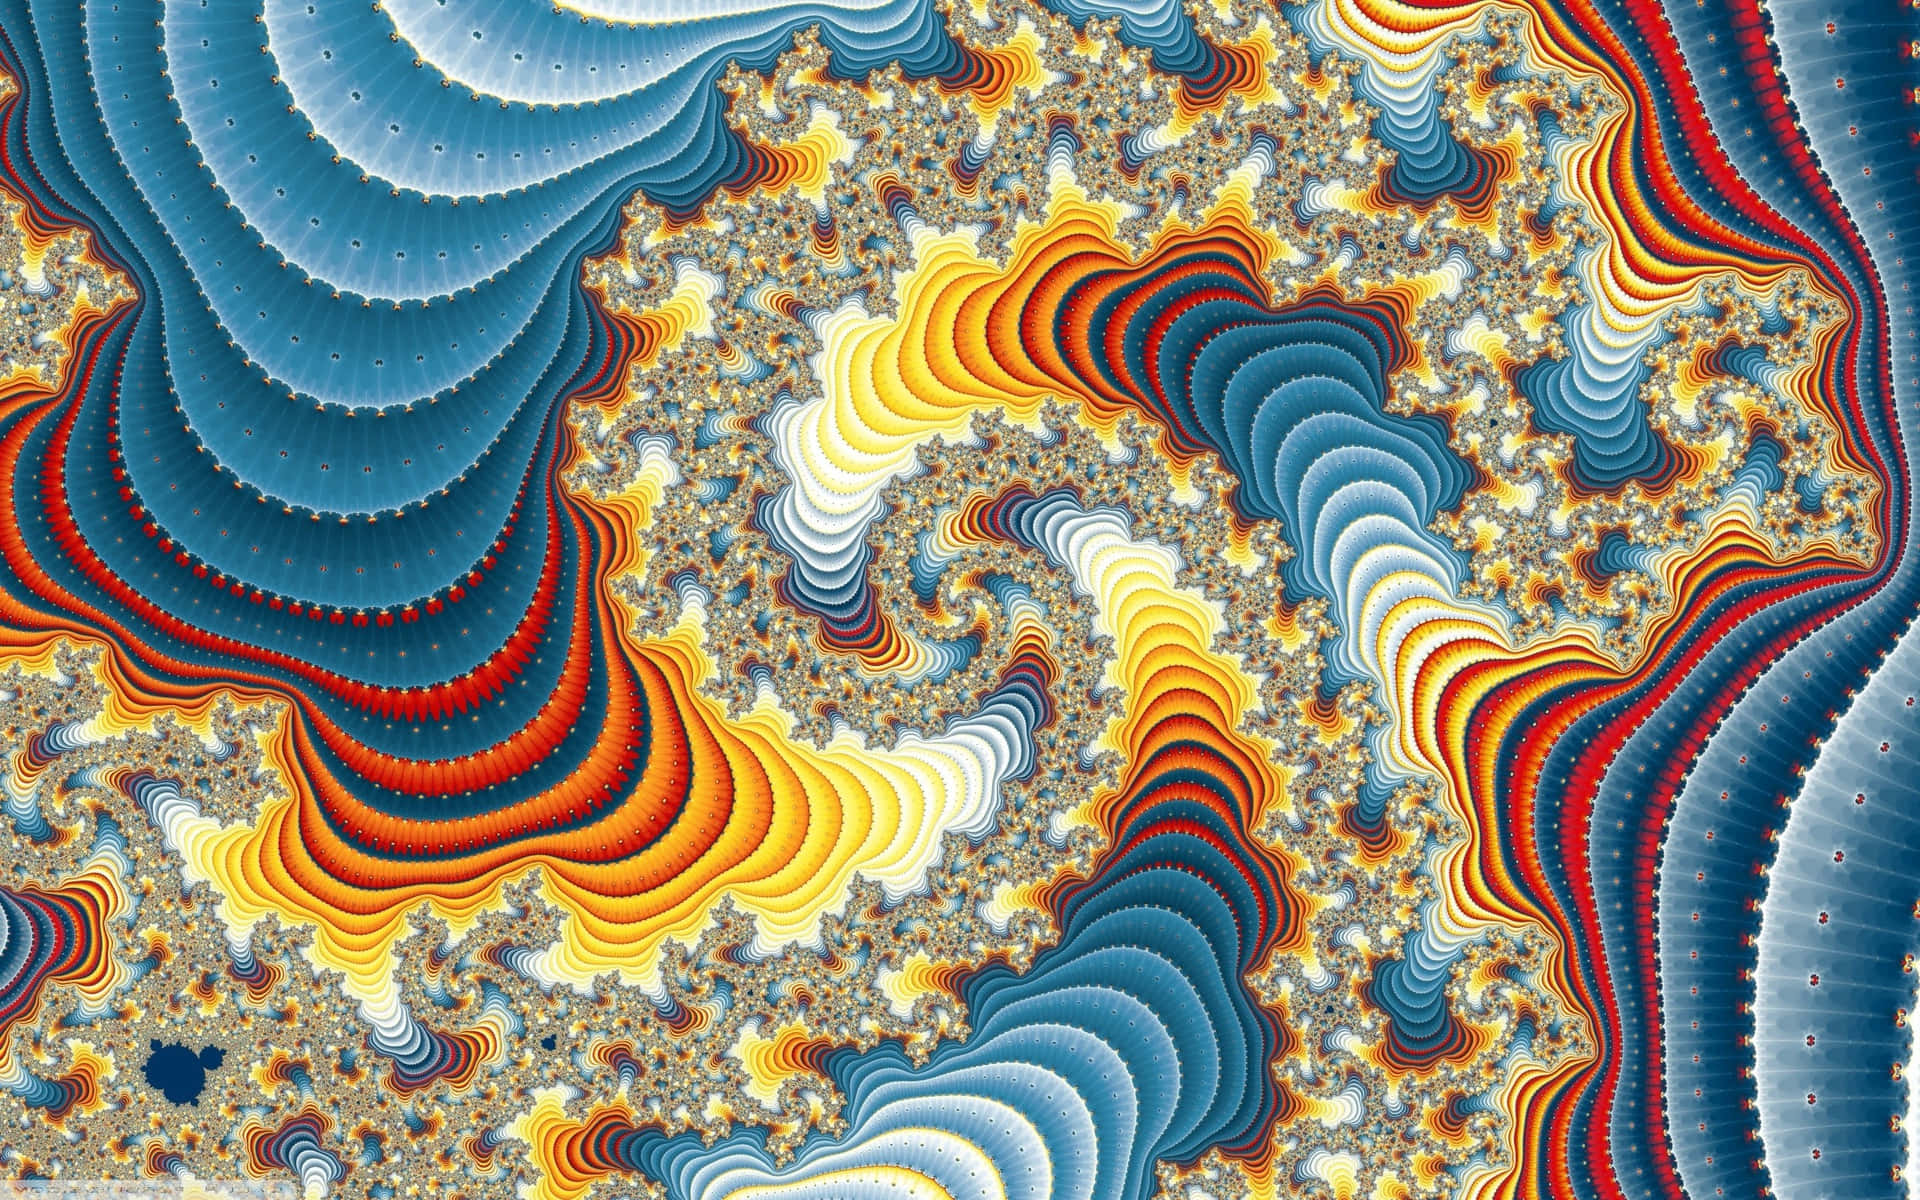 Hypnotic swirls of color